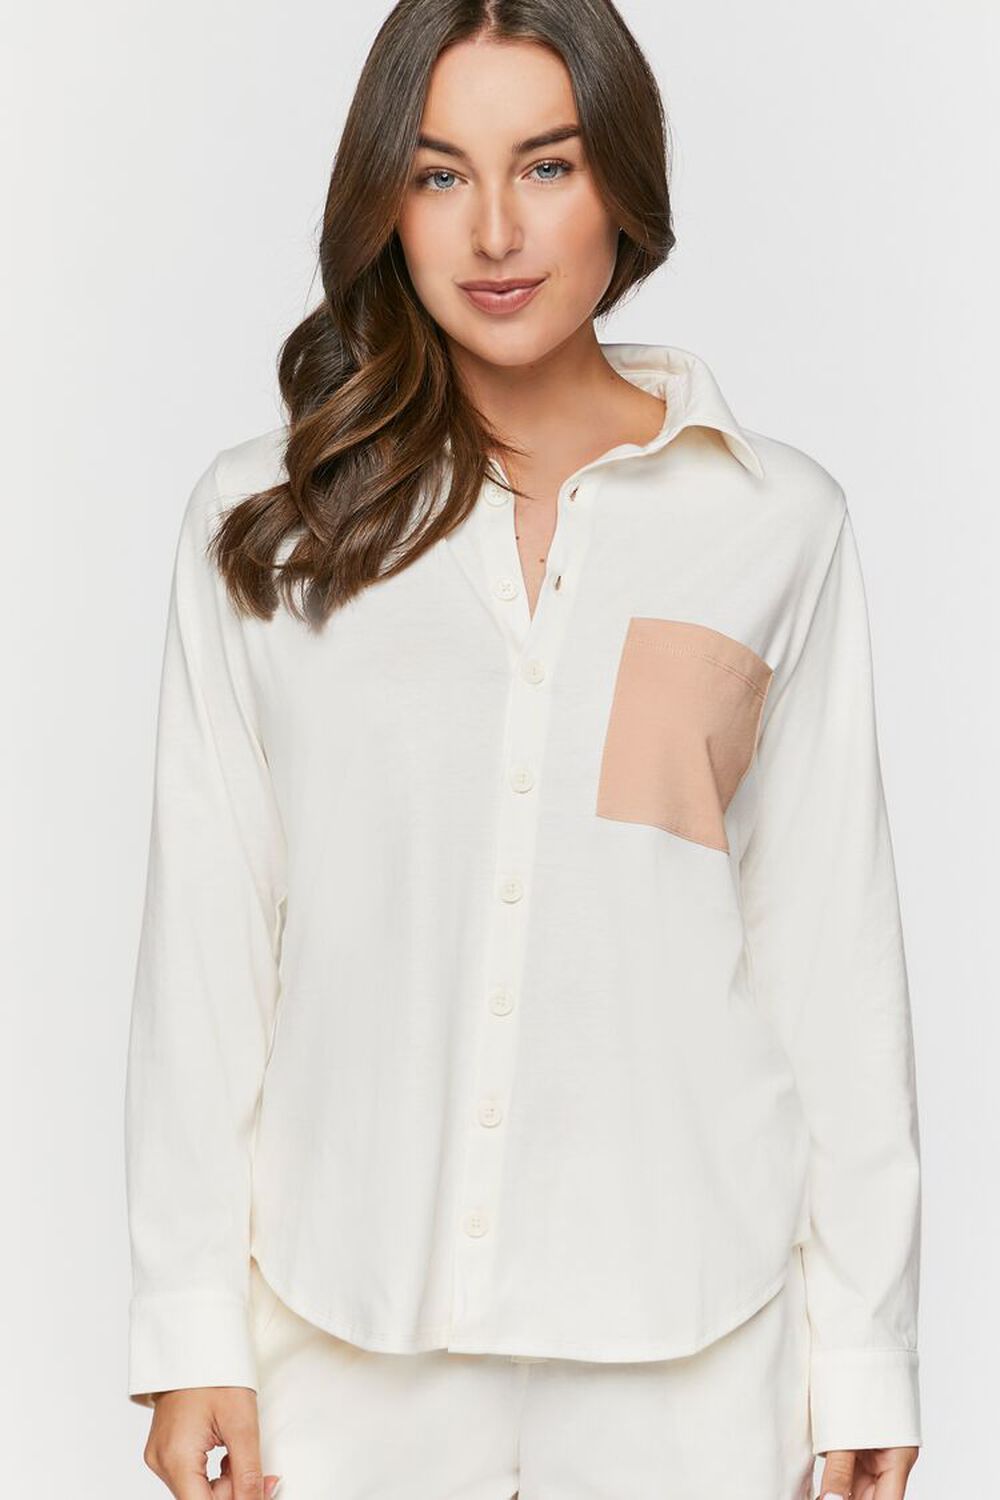 TAN/WHITE Colorblock Patch-Pocket Pajama Shirt, image 1